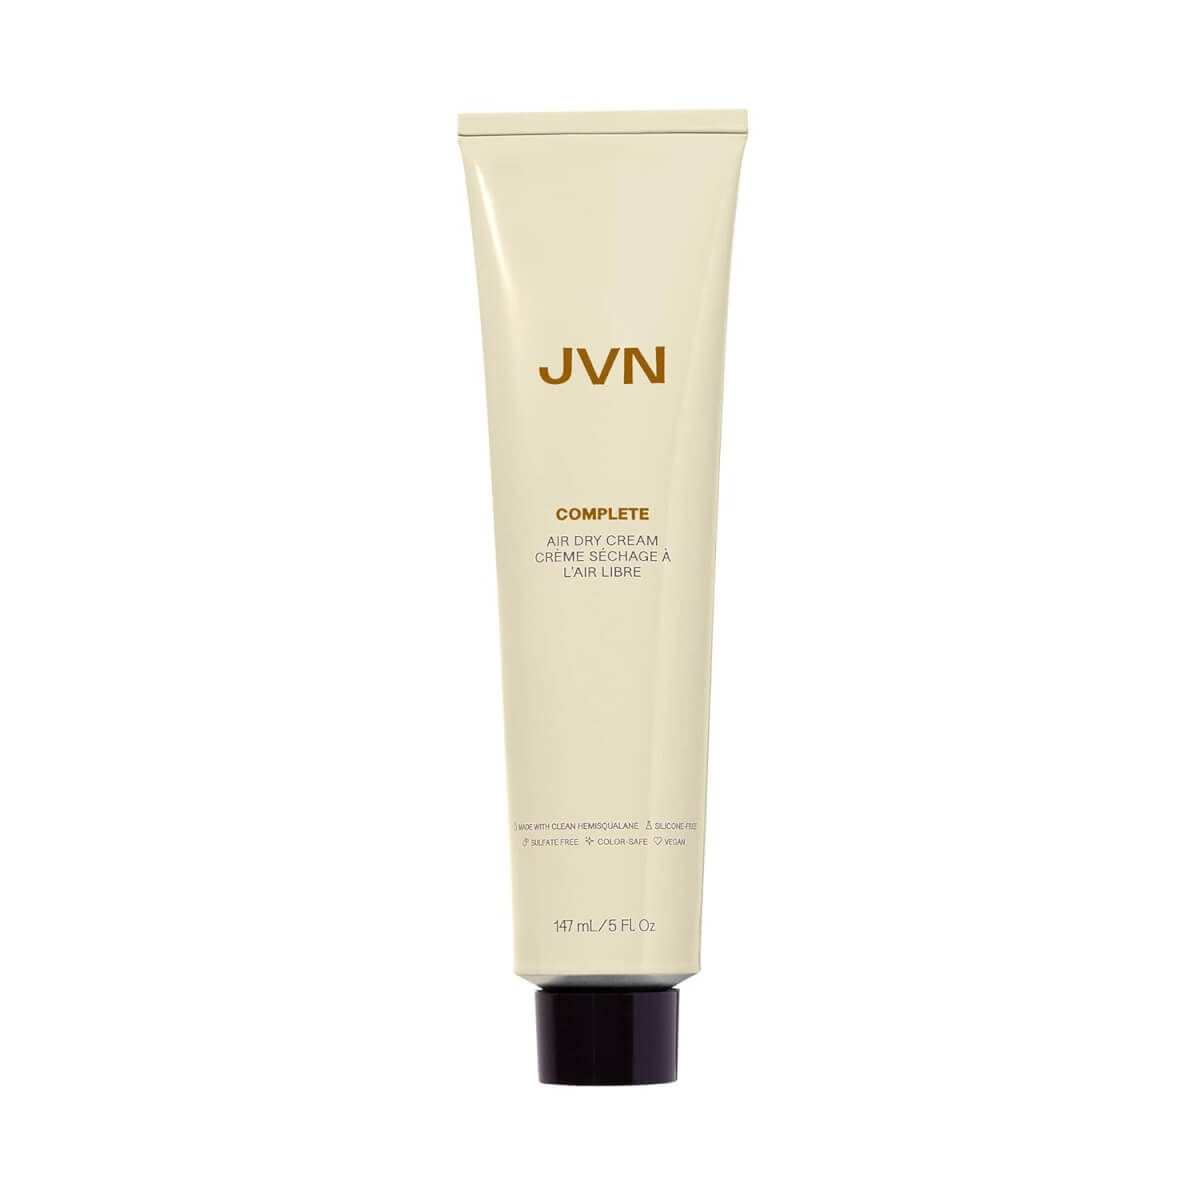 JVN Complete Air-Dry Cream